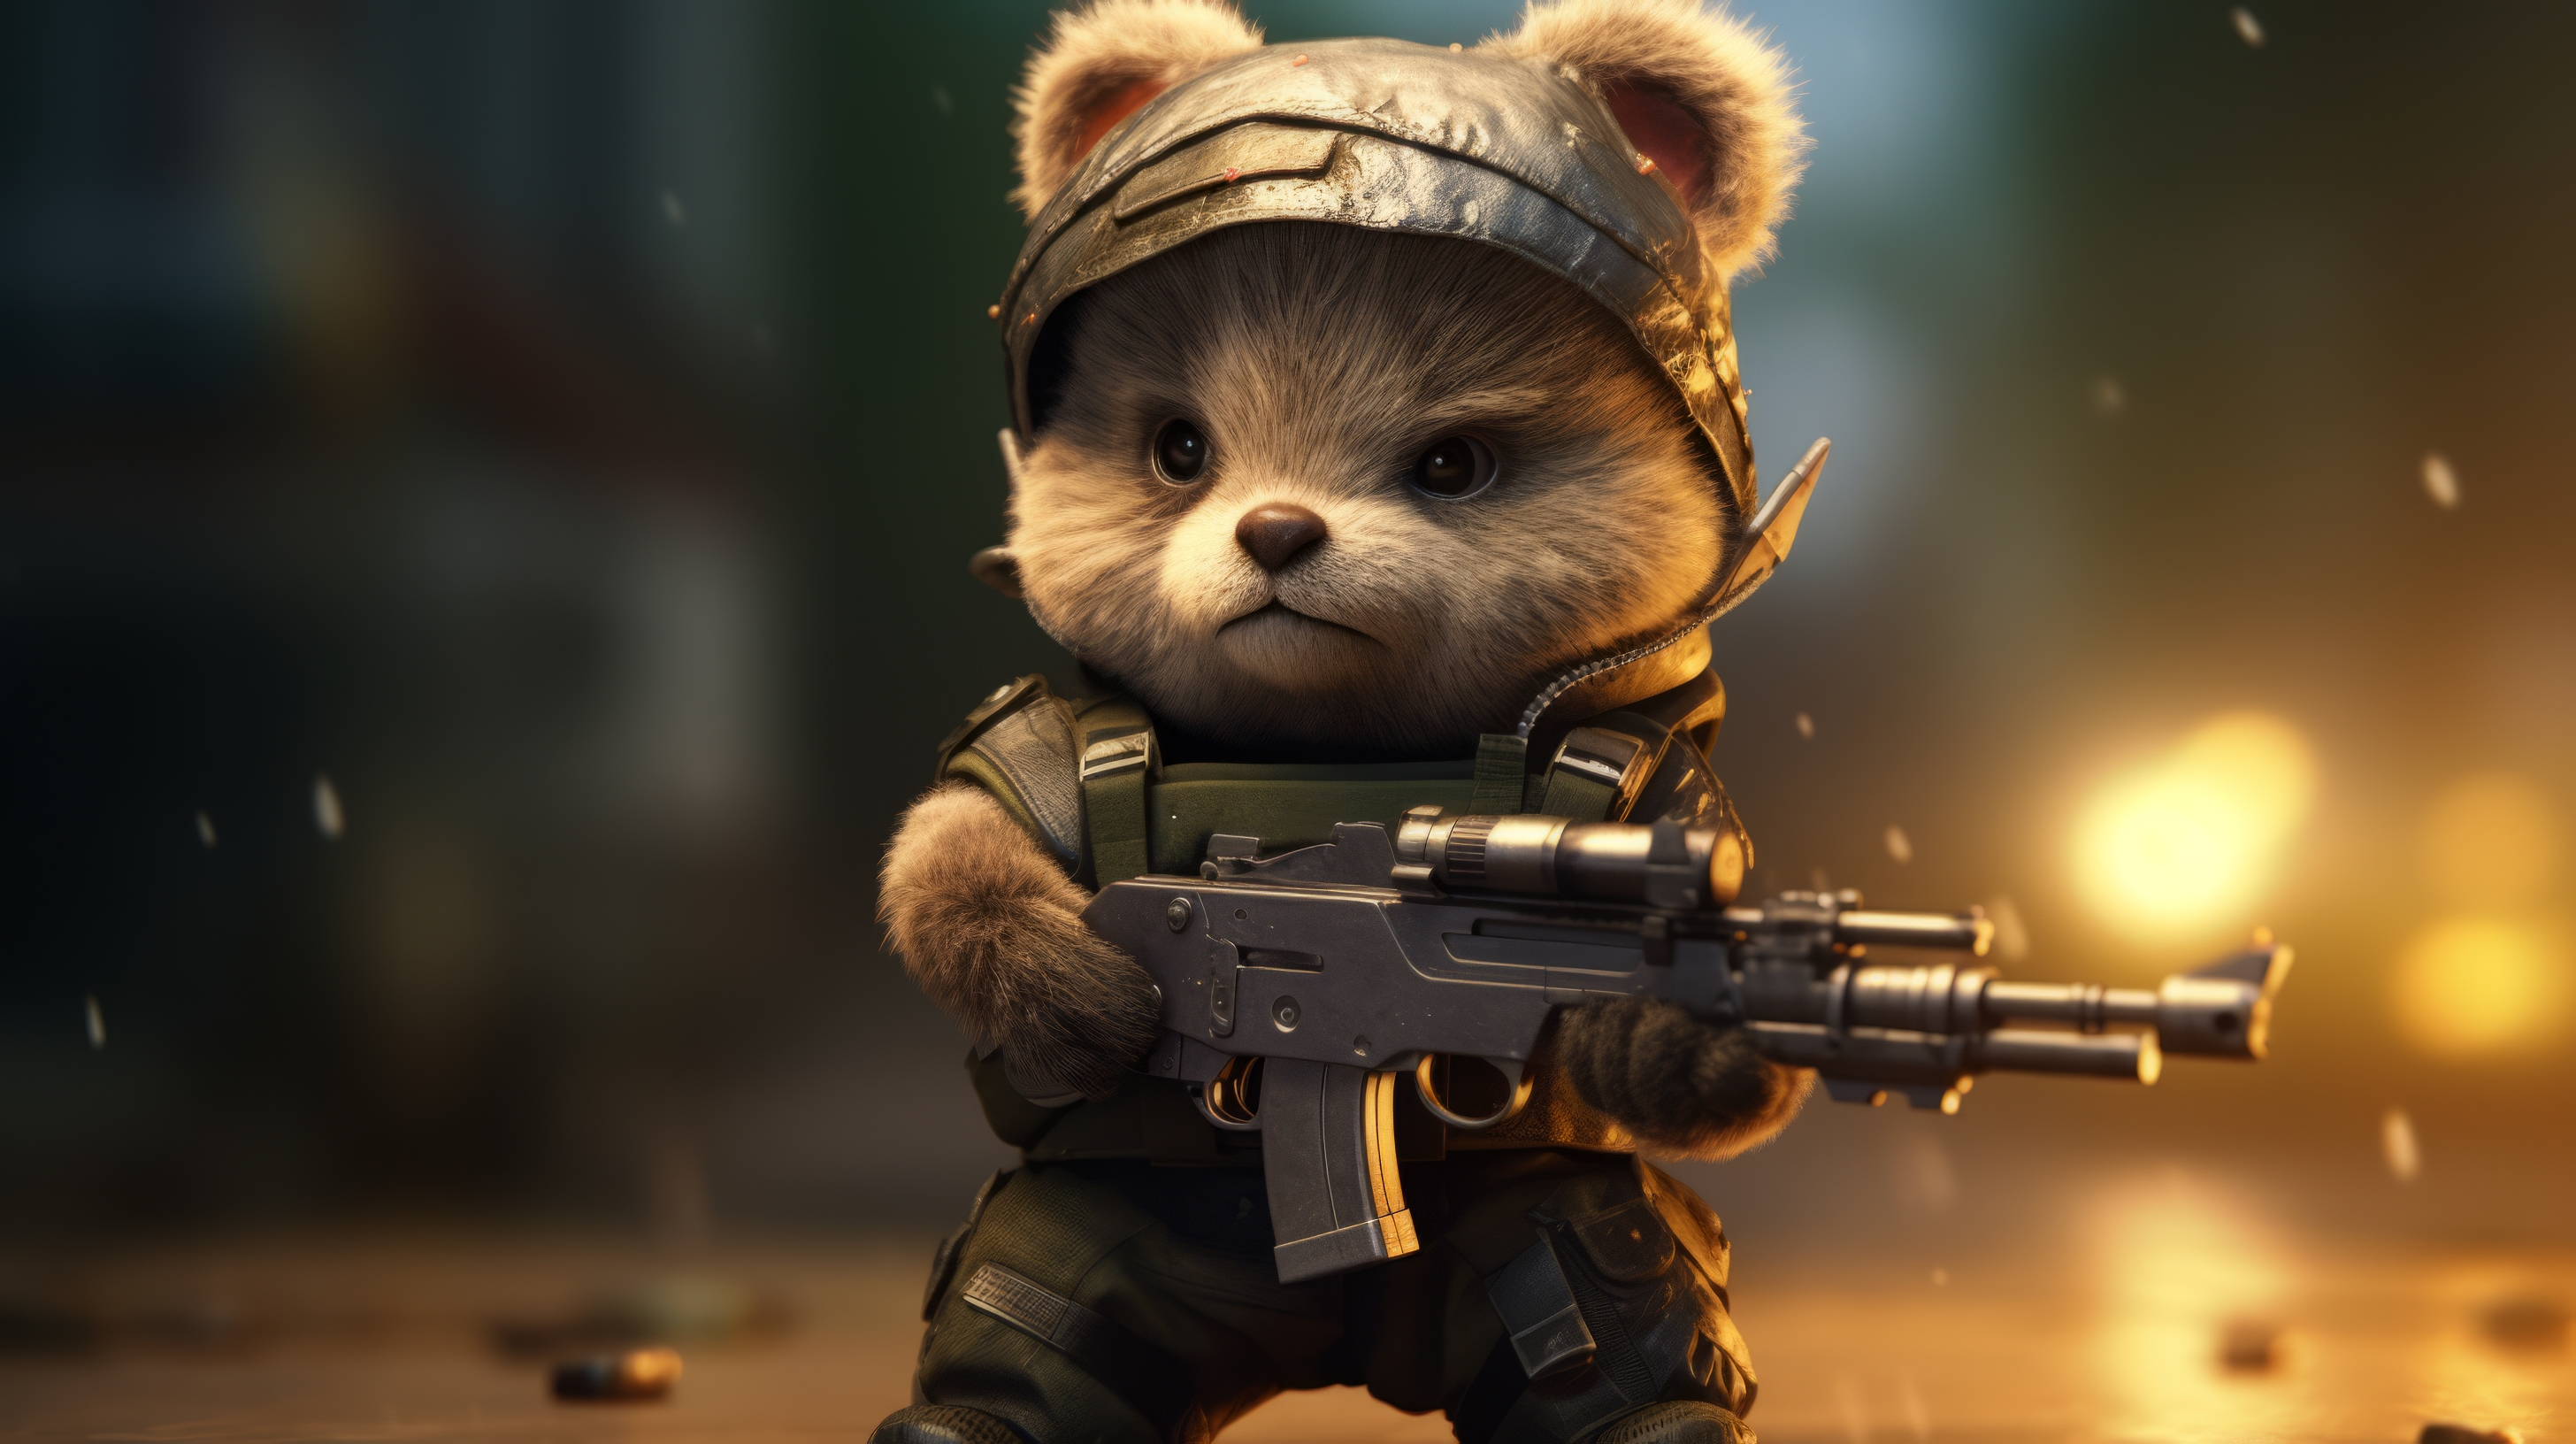 General 2912x1632 AI art teddy bears weapon bokeh soldier gun blurred blurry background animals